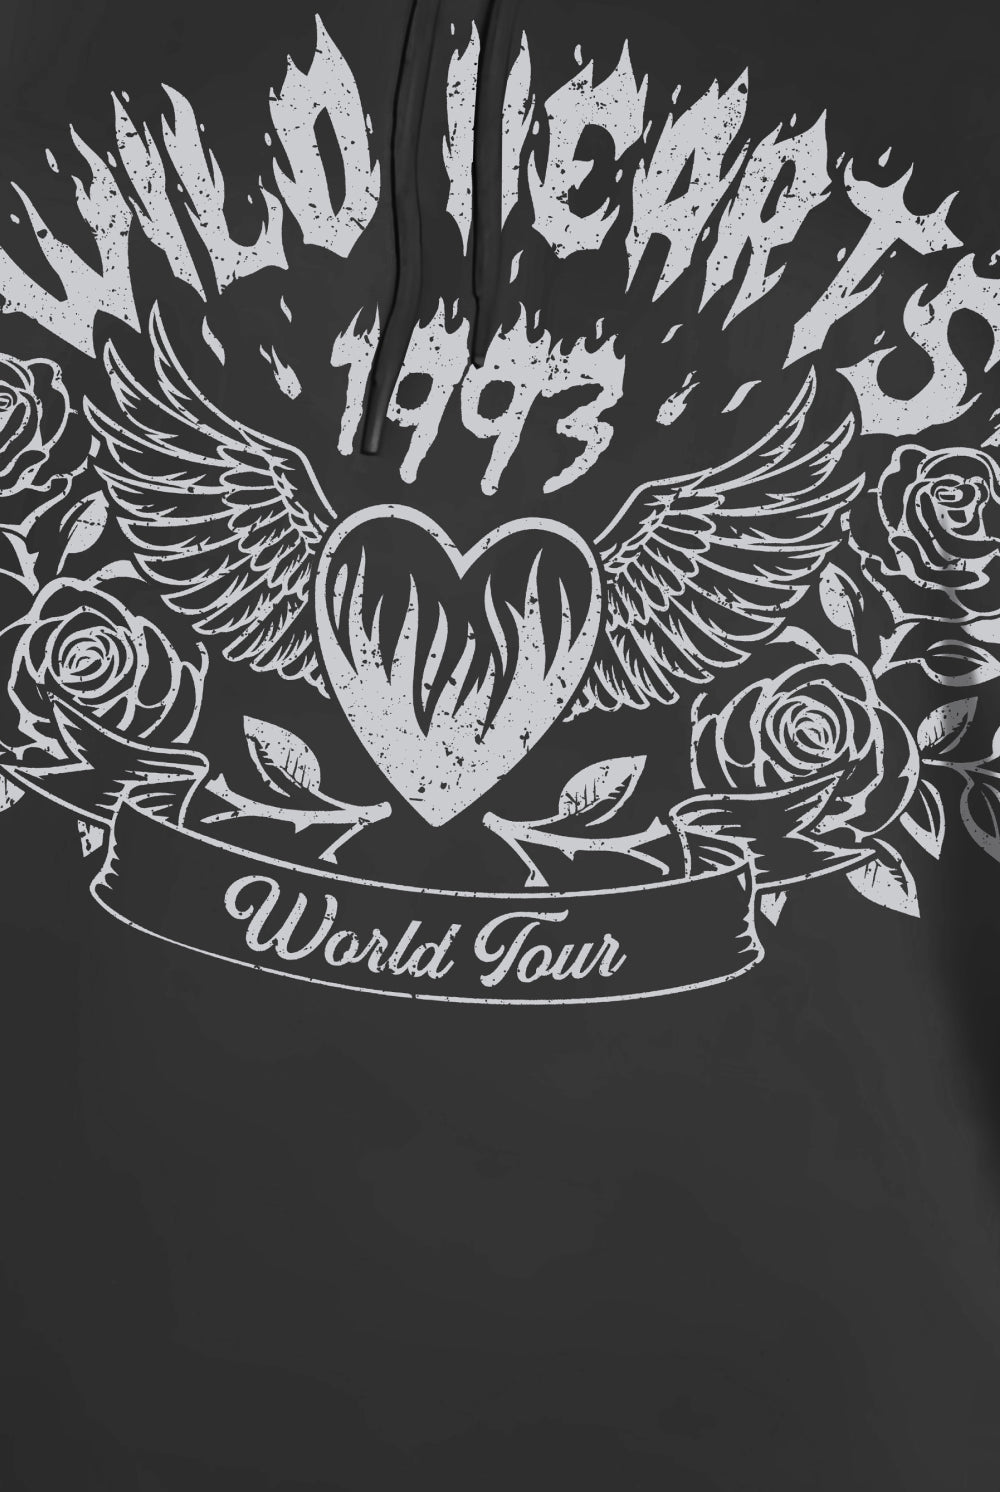 Dark Slate Gray Simply Love Simply Love Full Size WILD HEARTS 1993 WORLD TOUR Graphic Hoodie Sweatshirts